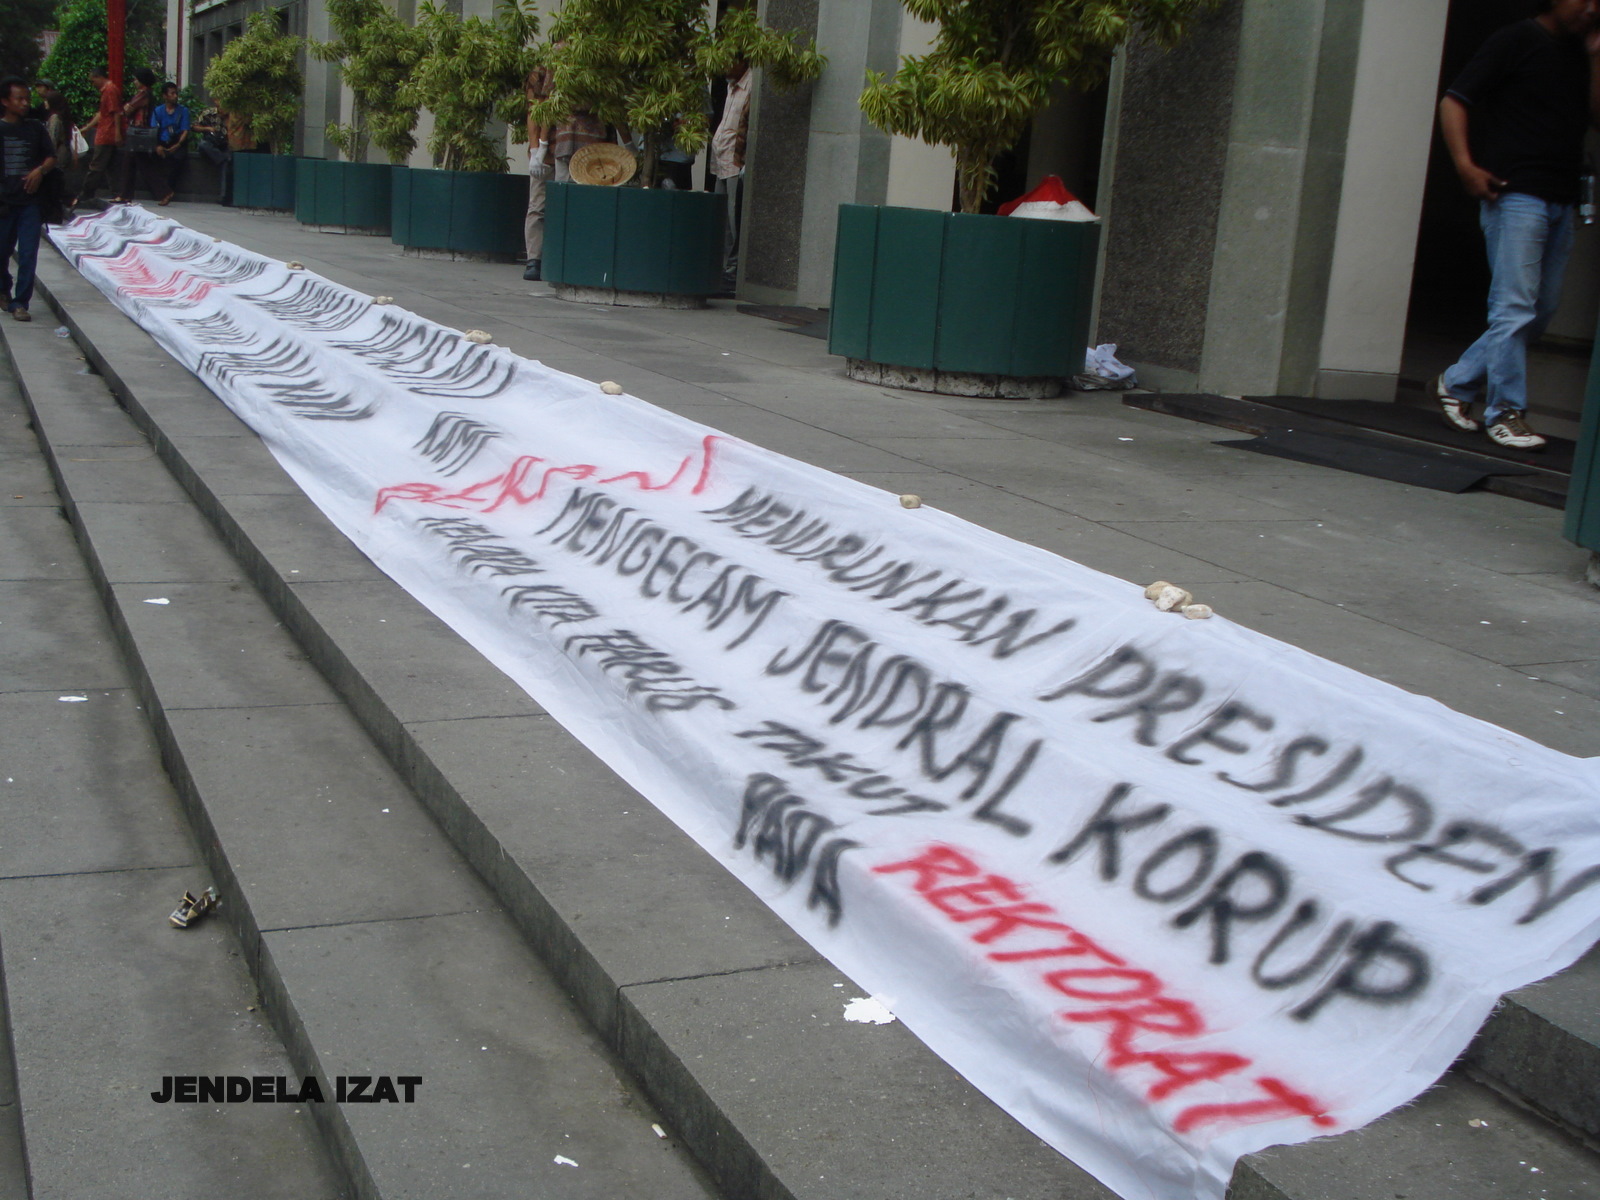 Suasana halaman gedung rektorat saat masa melakukan aksi berbagai tuntutan tertulis dalam spanduk